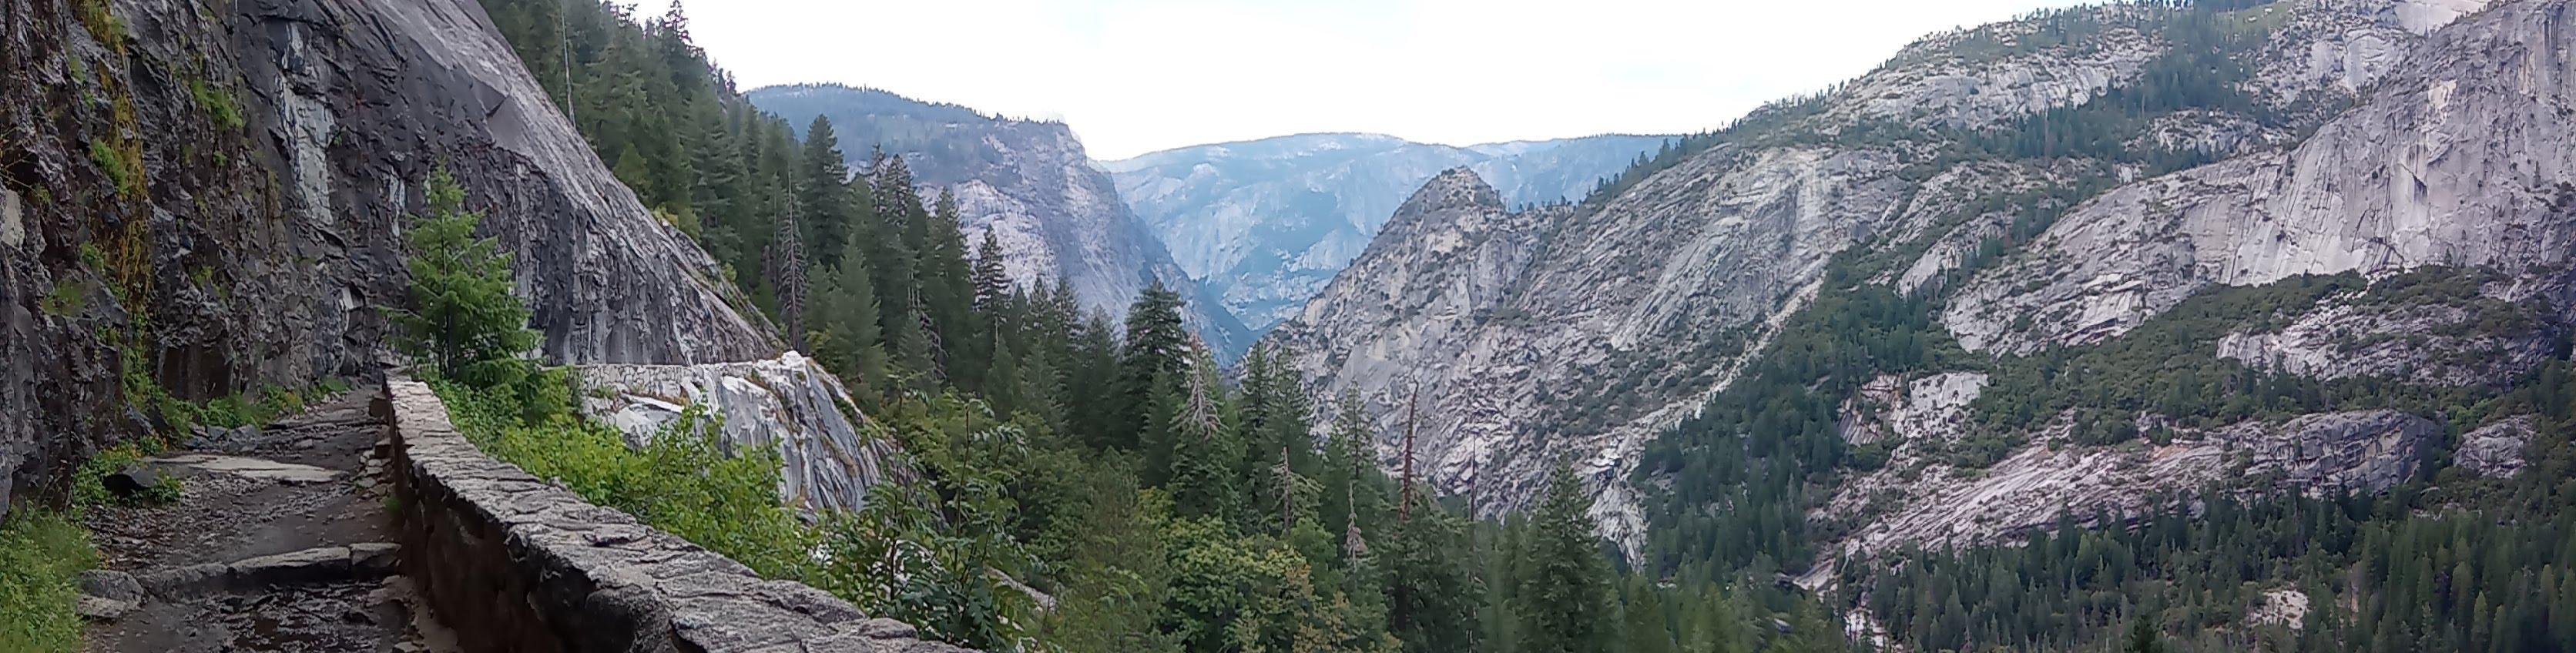 John Muir trail and Yosemite valley view